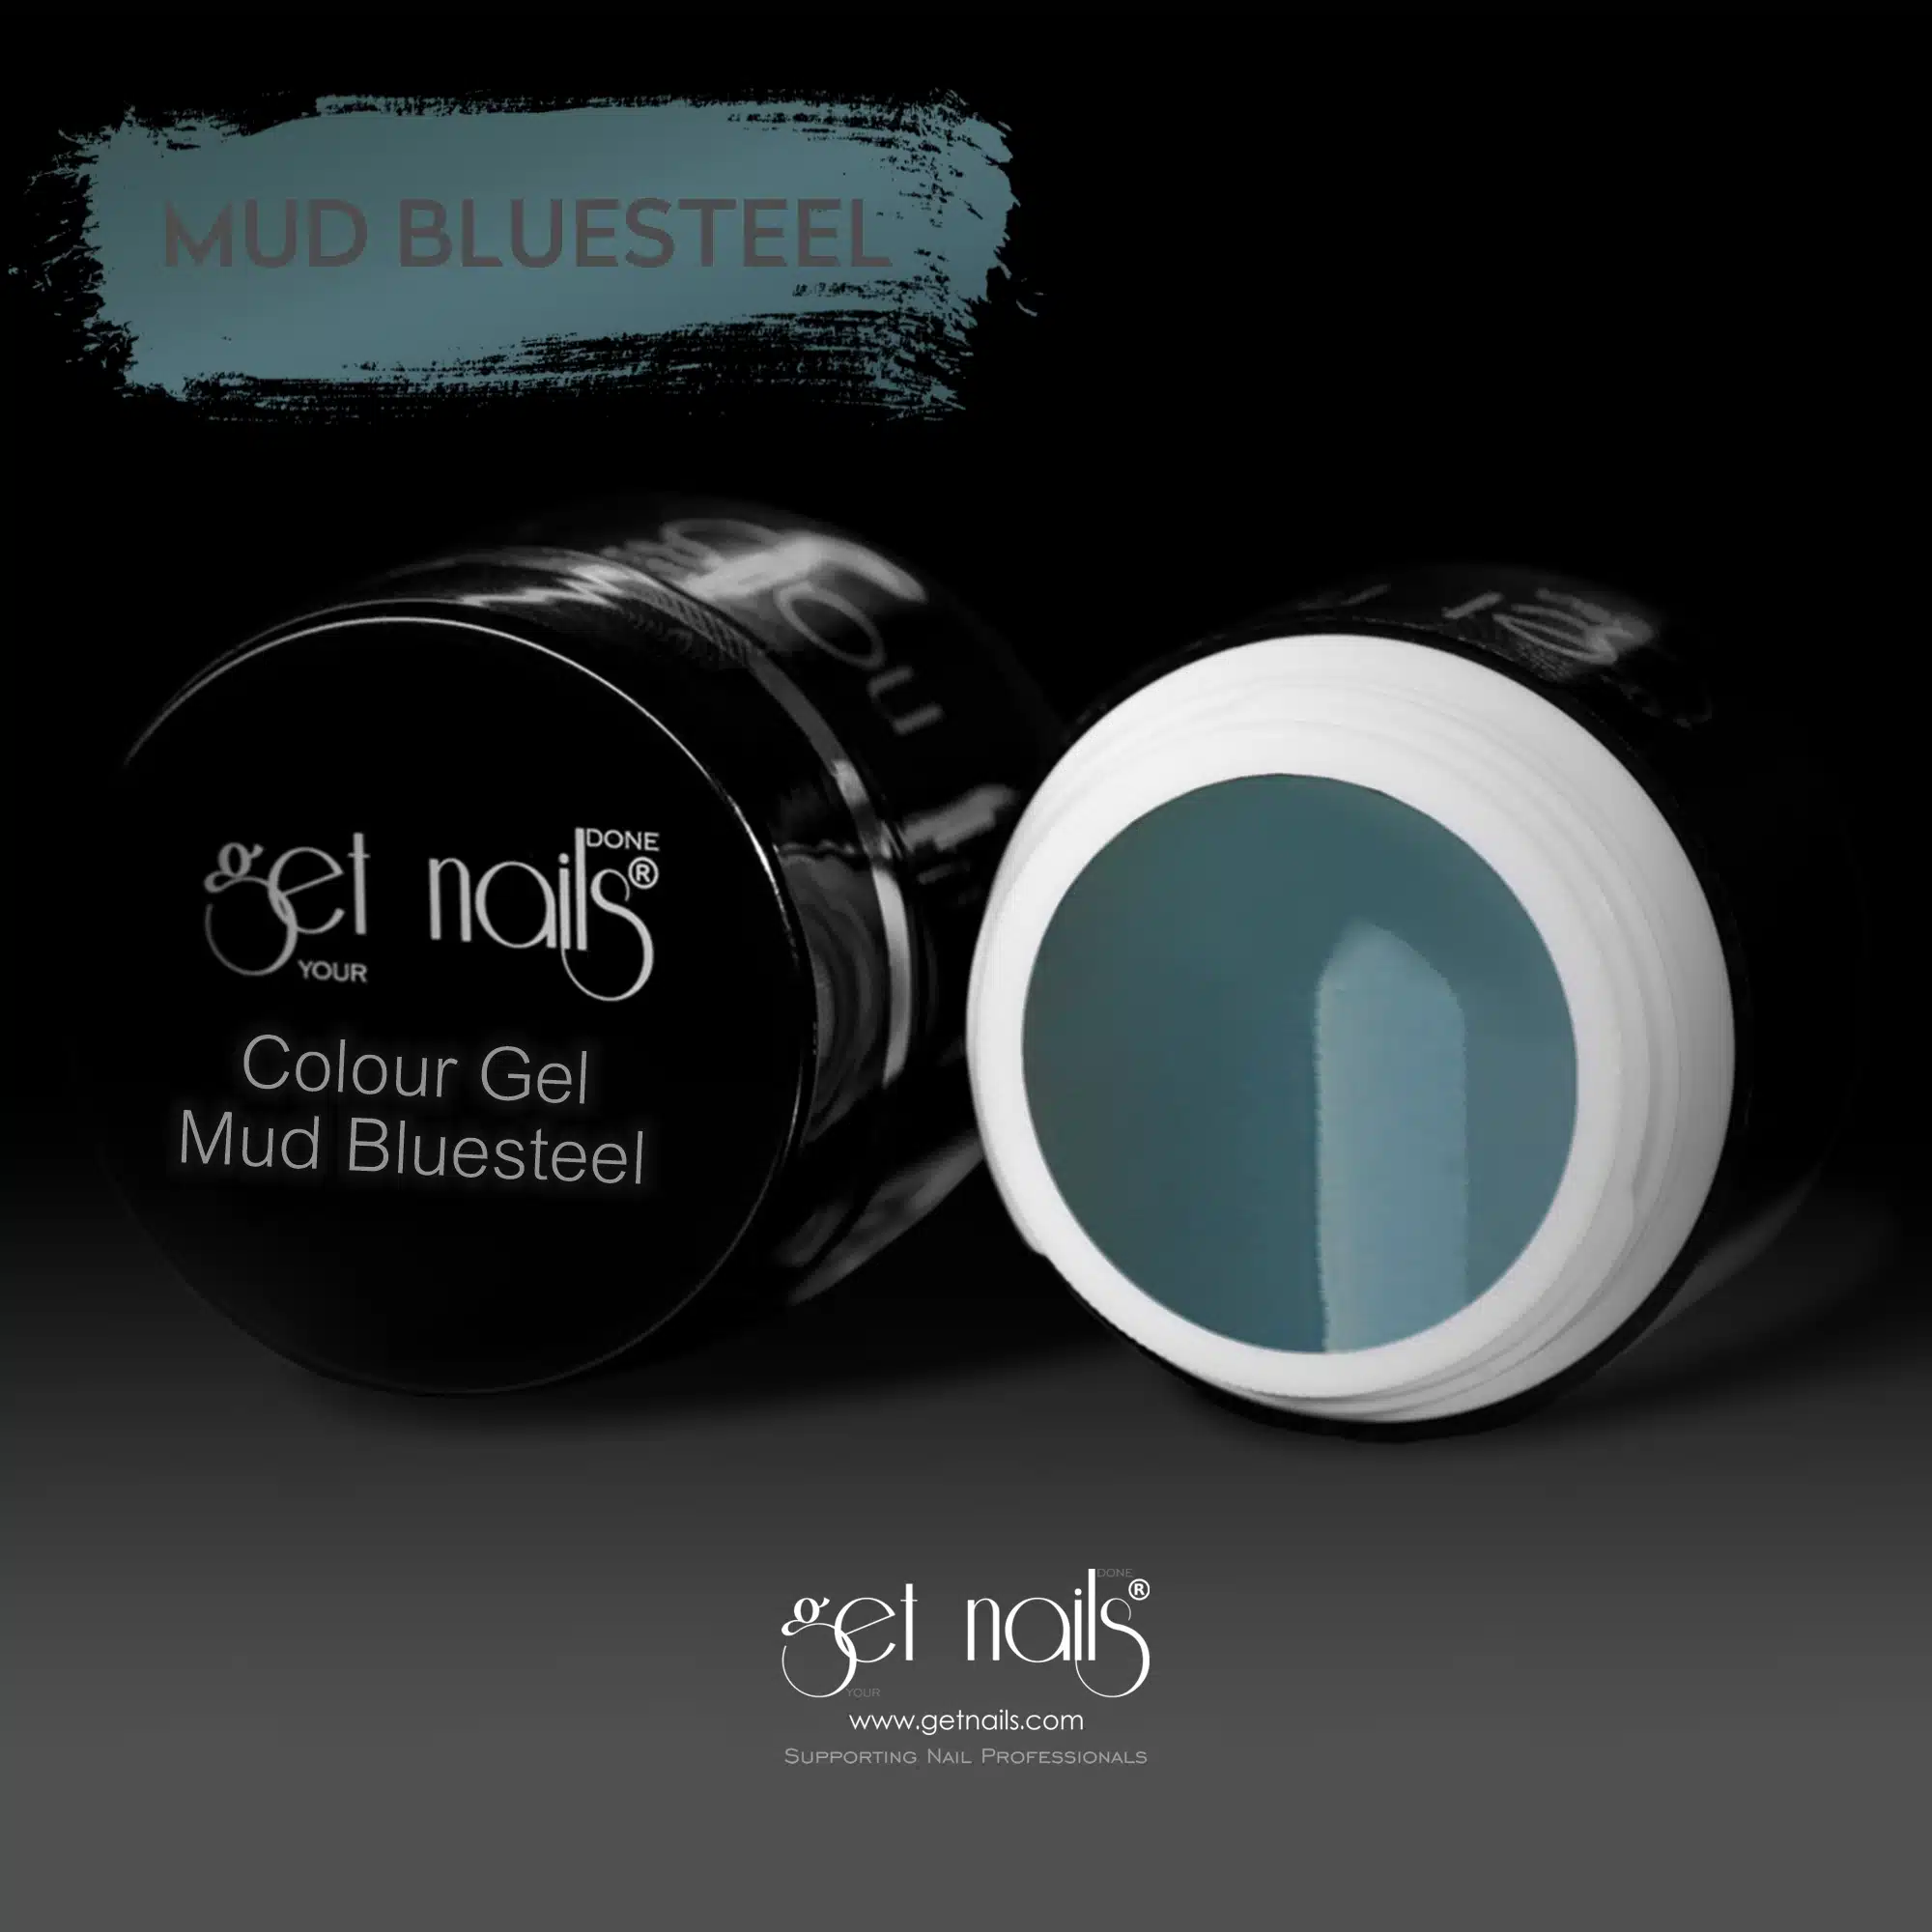 Get Nails Austria - Gel colorato Mud Bluesteel 5g